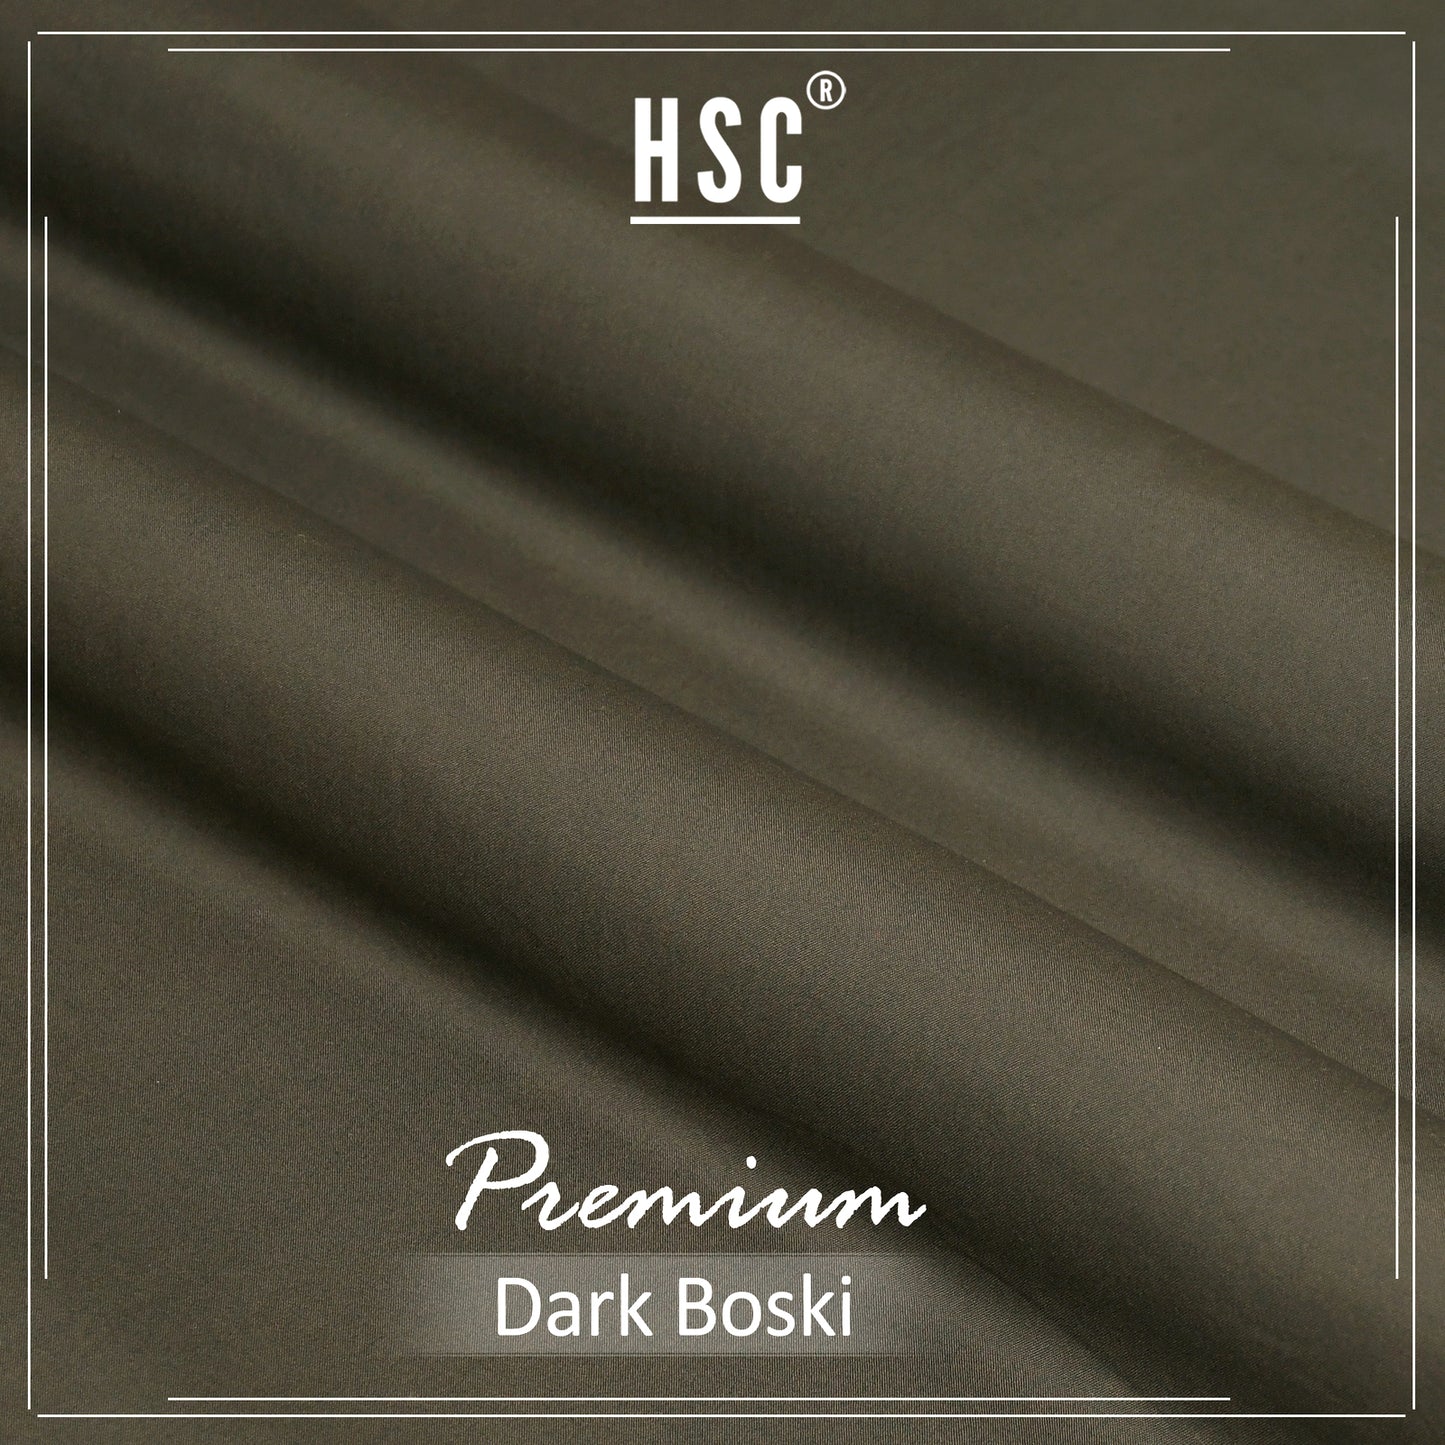 Buy1 Get 1 Free Premium Dark Boski For Men - PDB12 HSC